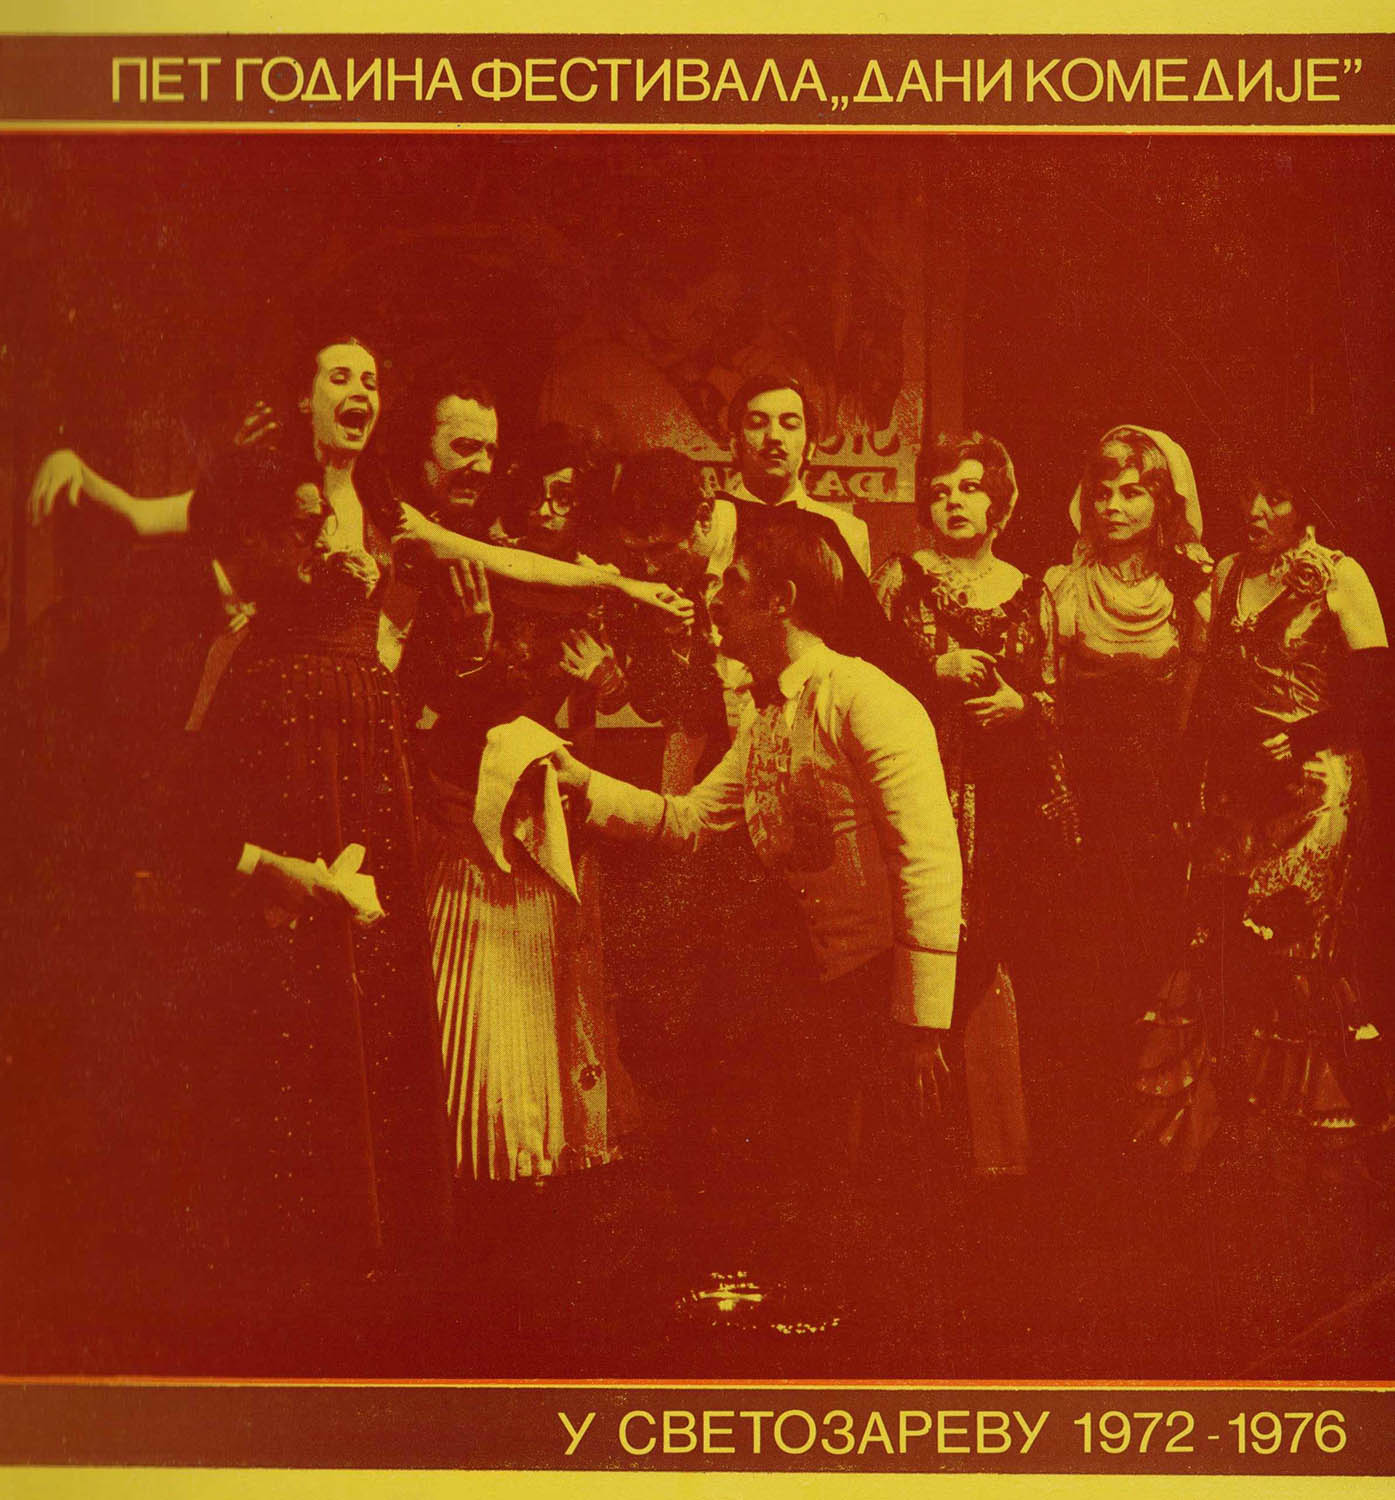 Five years of the “Days of Comedy” festival in Svetozarevo 1972-1976